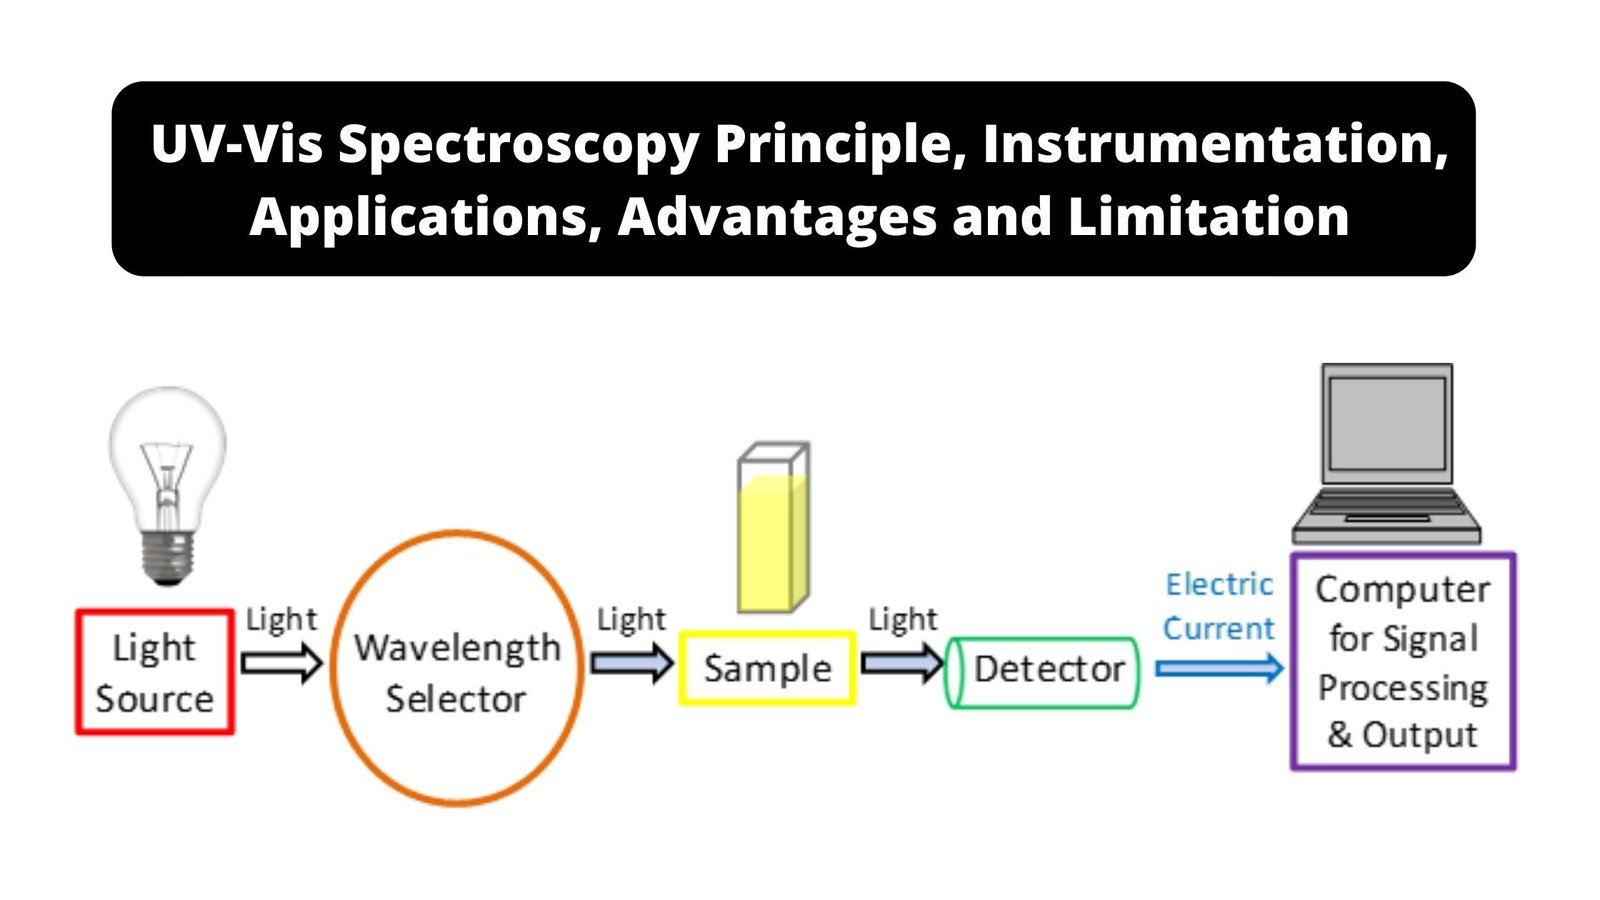 UV-Vis Spectroscopy - Principle, Instrumentation, Applications, Advantages, and Limitation